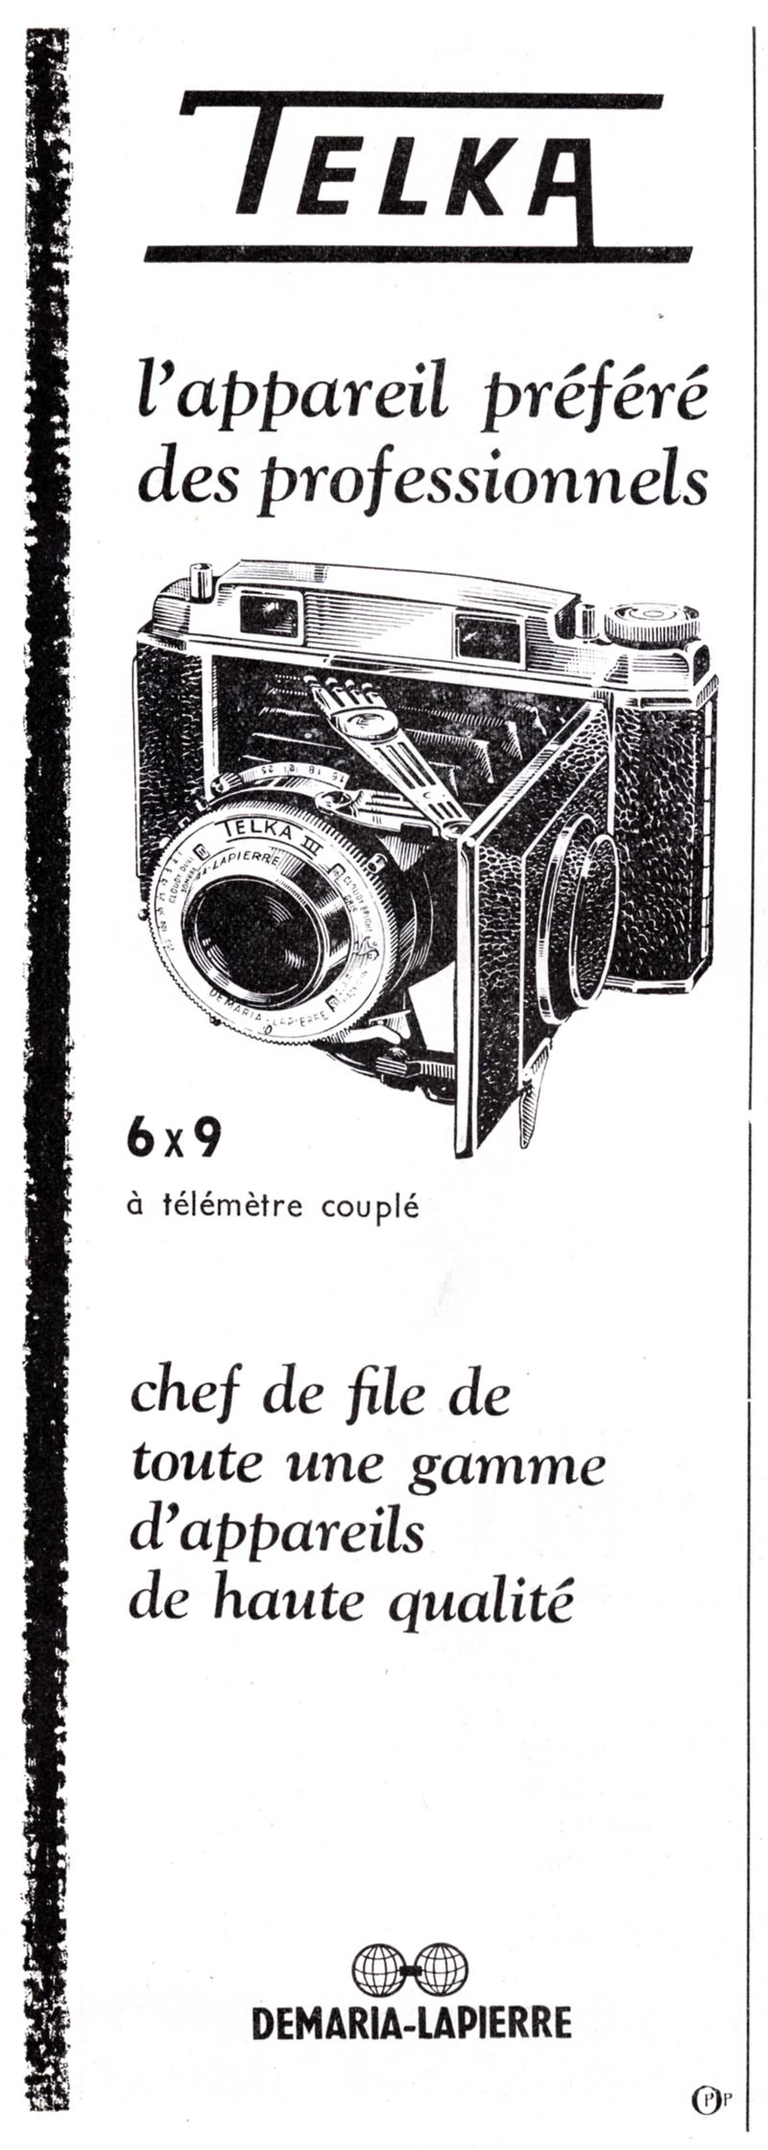 Demaria-Lapierre-Mollier - Telka I, Telka II, Telka III, Telka X, Telka XX - janvier 1951 - Photo-Revue